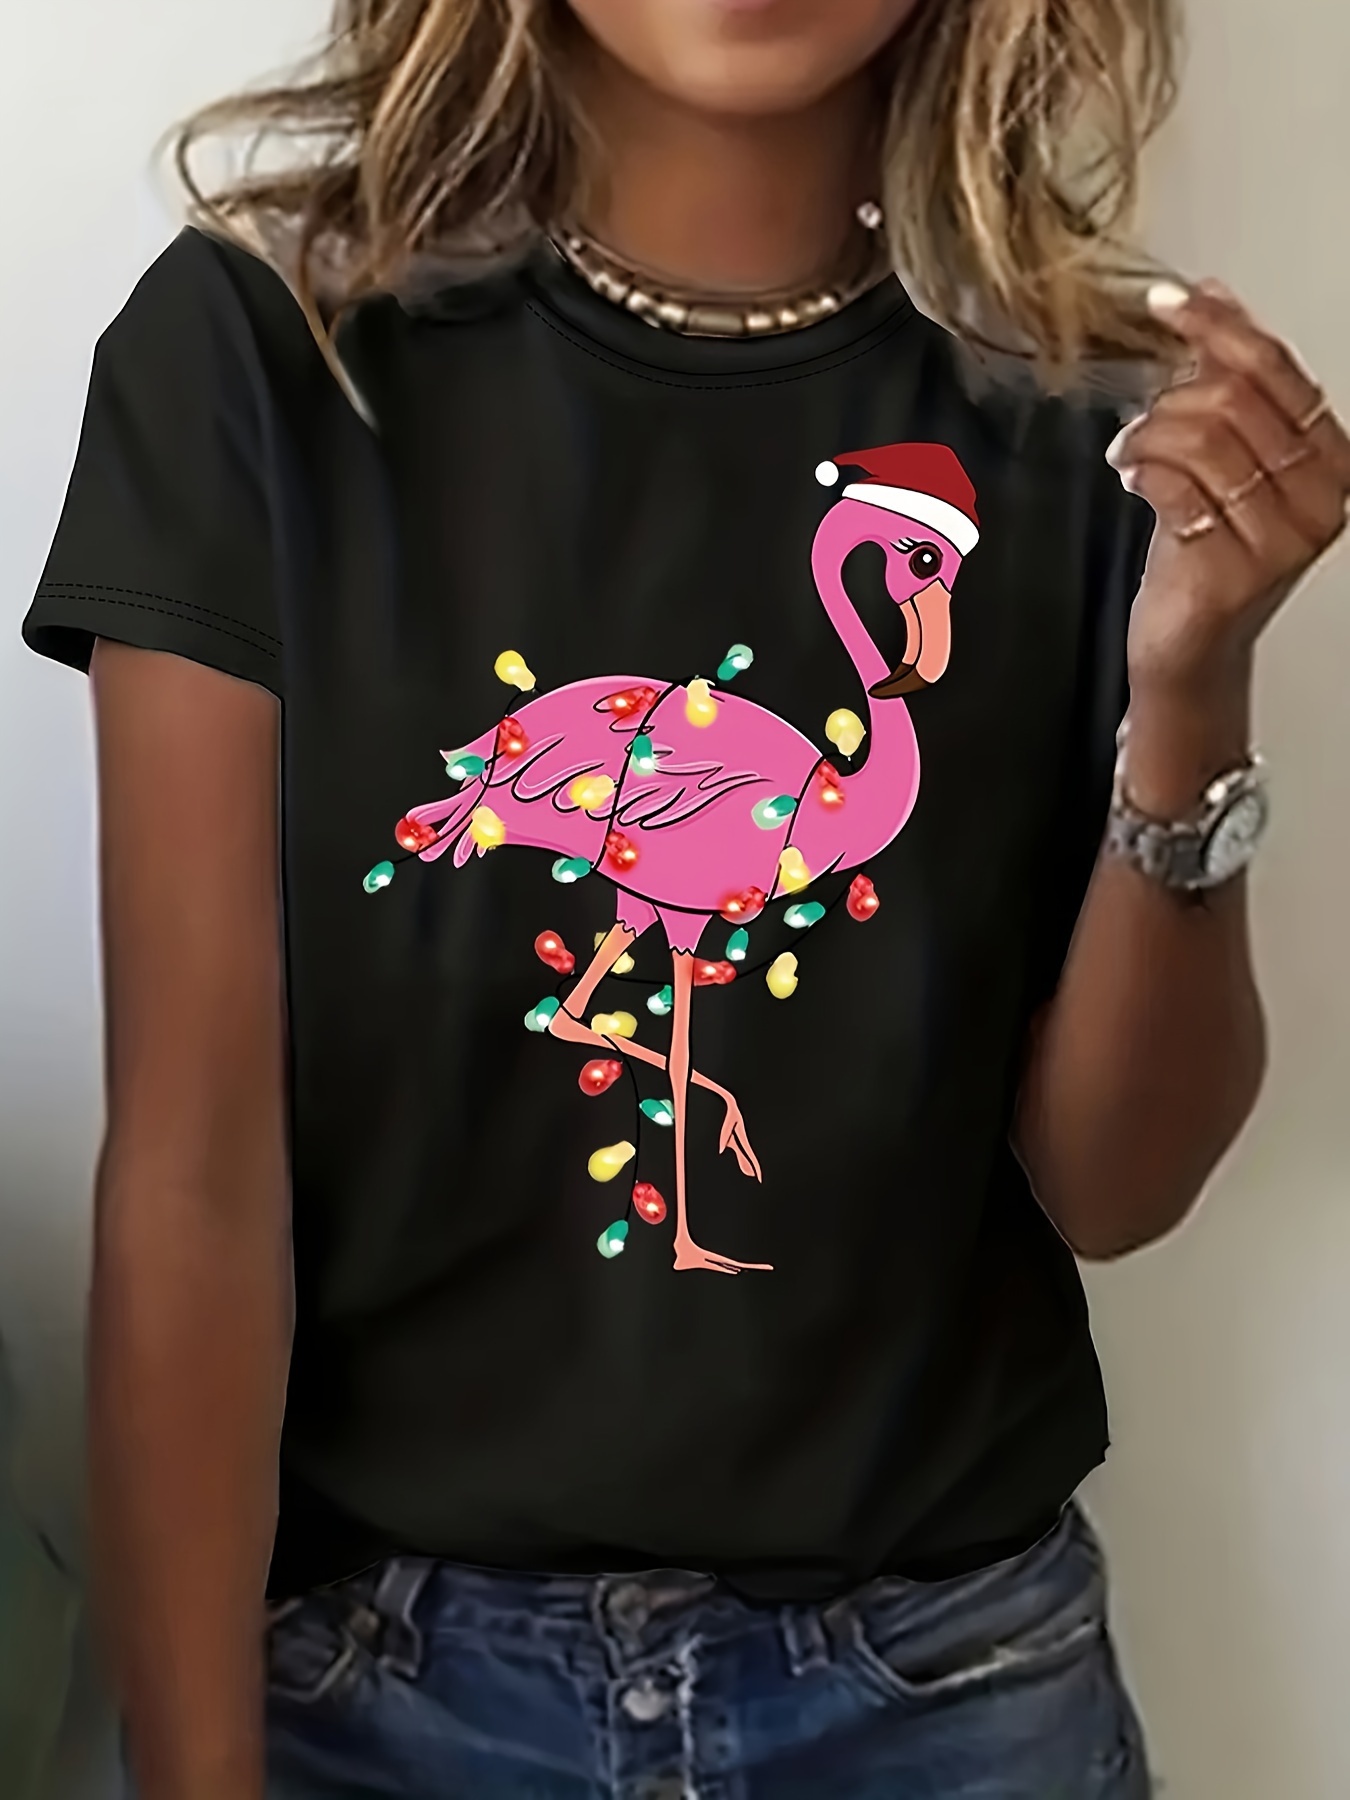  Flamingo - Camisa de manga larga para mujer, Pink